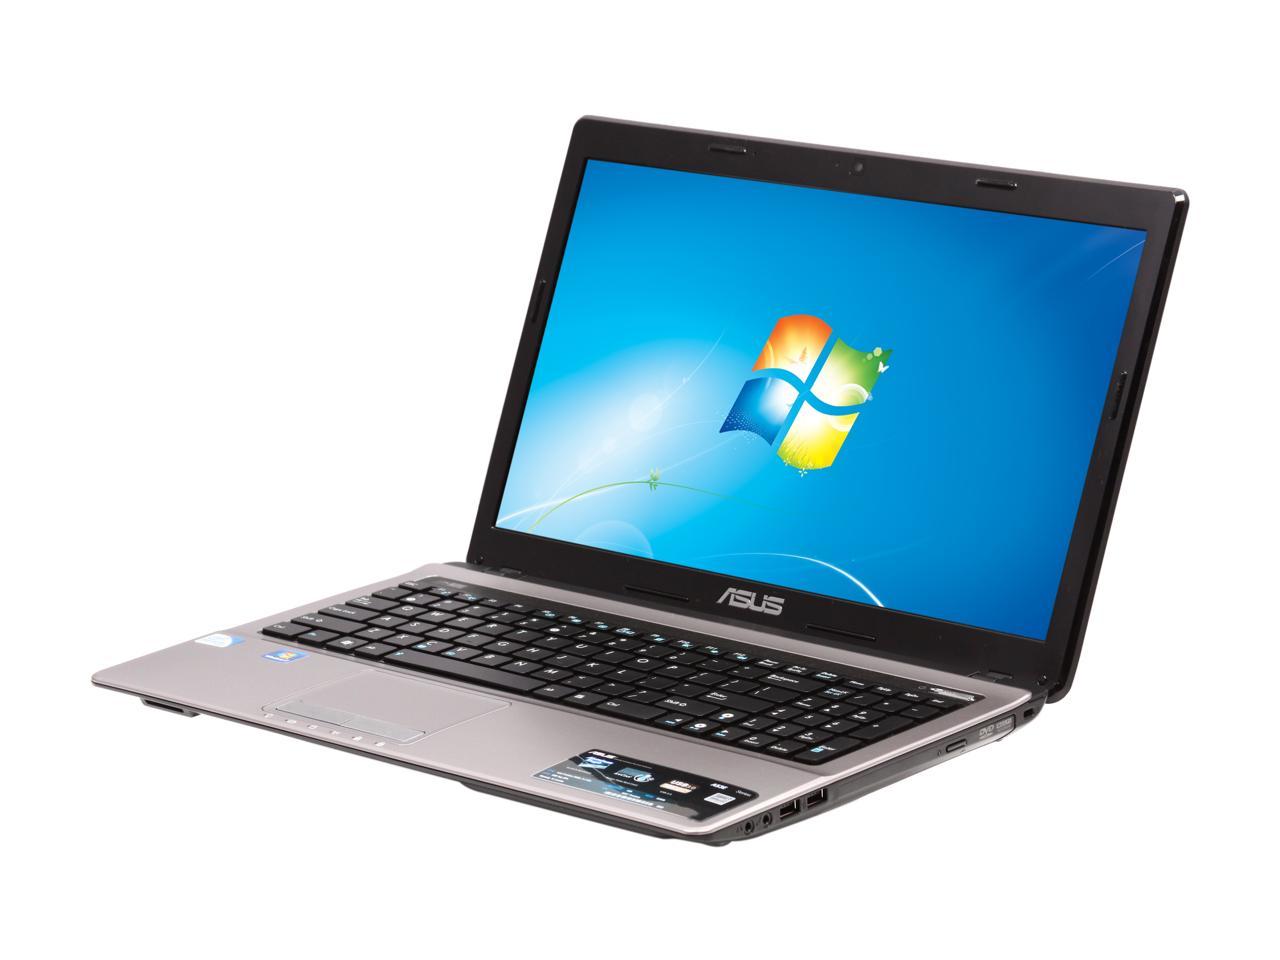 Asus Laptop A53e Eh91 Intel Pentium B950 2 10 Ghz 4 Gb Memory 320 Gb Hdd Intel Hd Graphics 15 6 Windows 7 Home Premium 64 Bit Newegg Com - cyber hub roblox dispenser